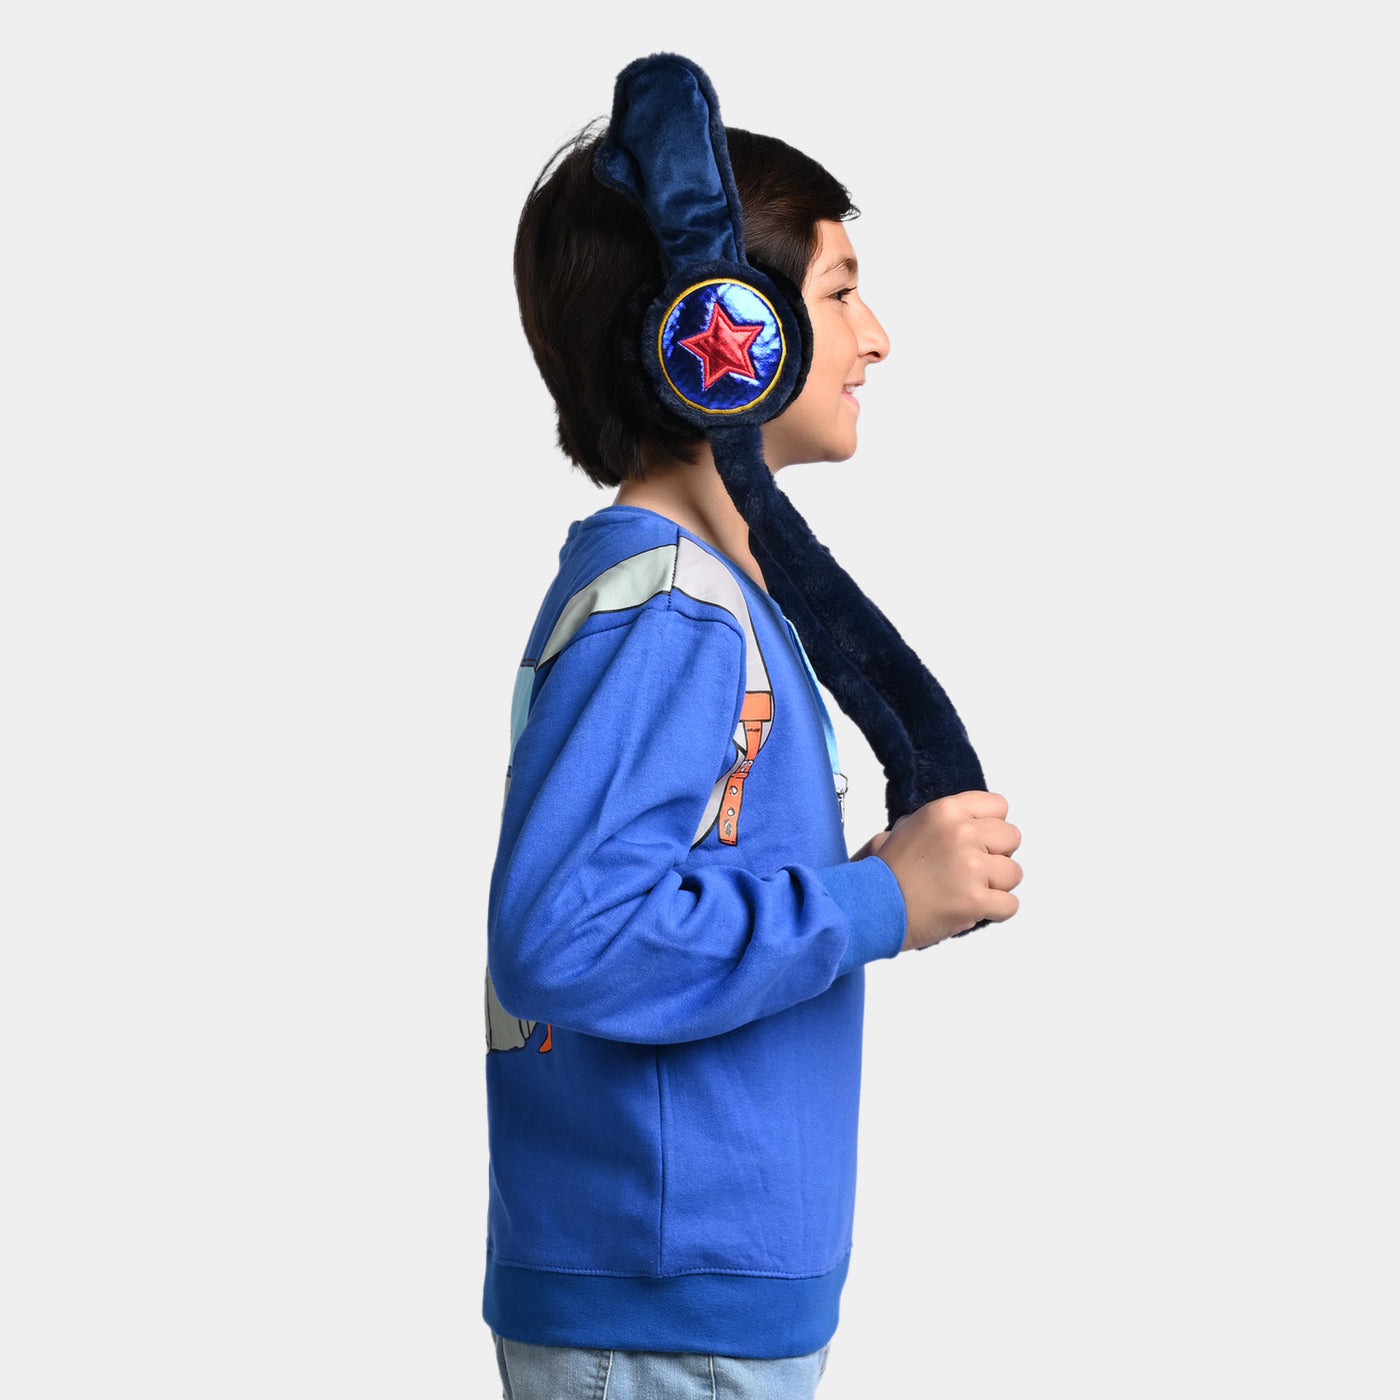 Stylish & Protective Movable Ears Earmuff For Kids